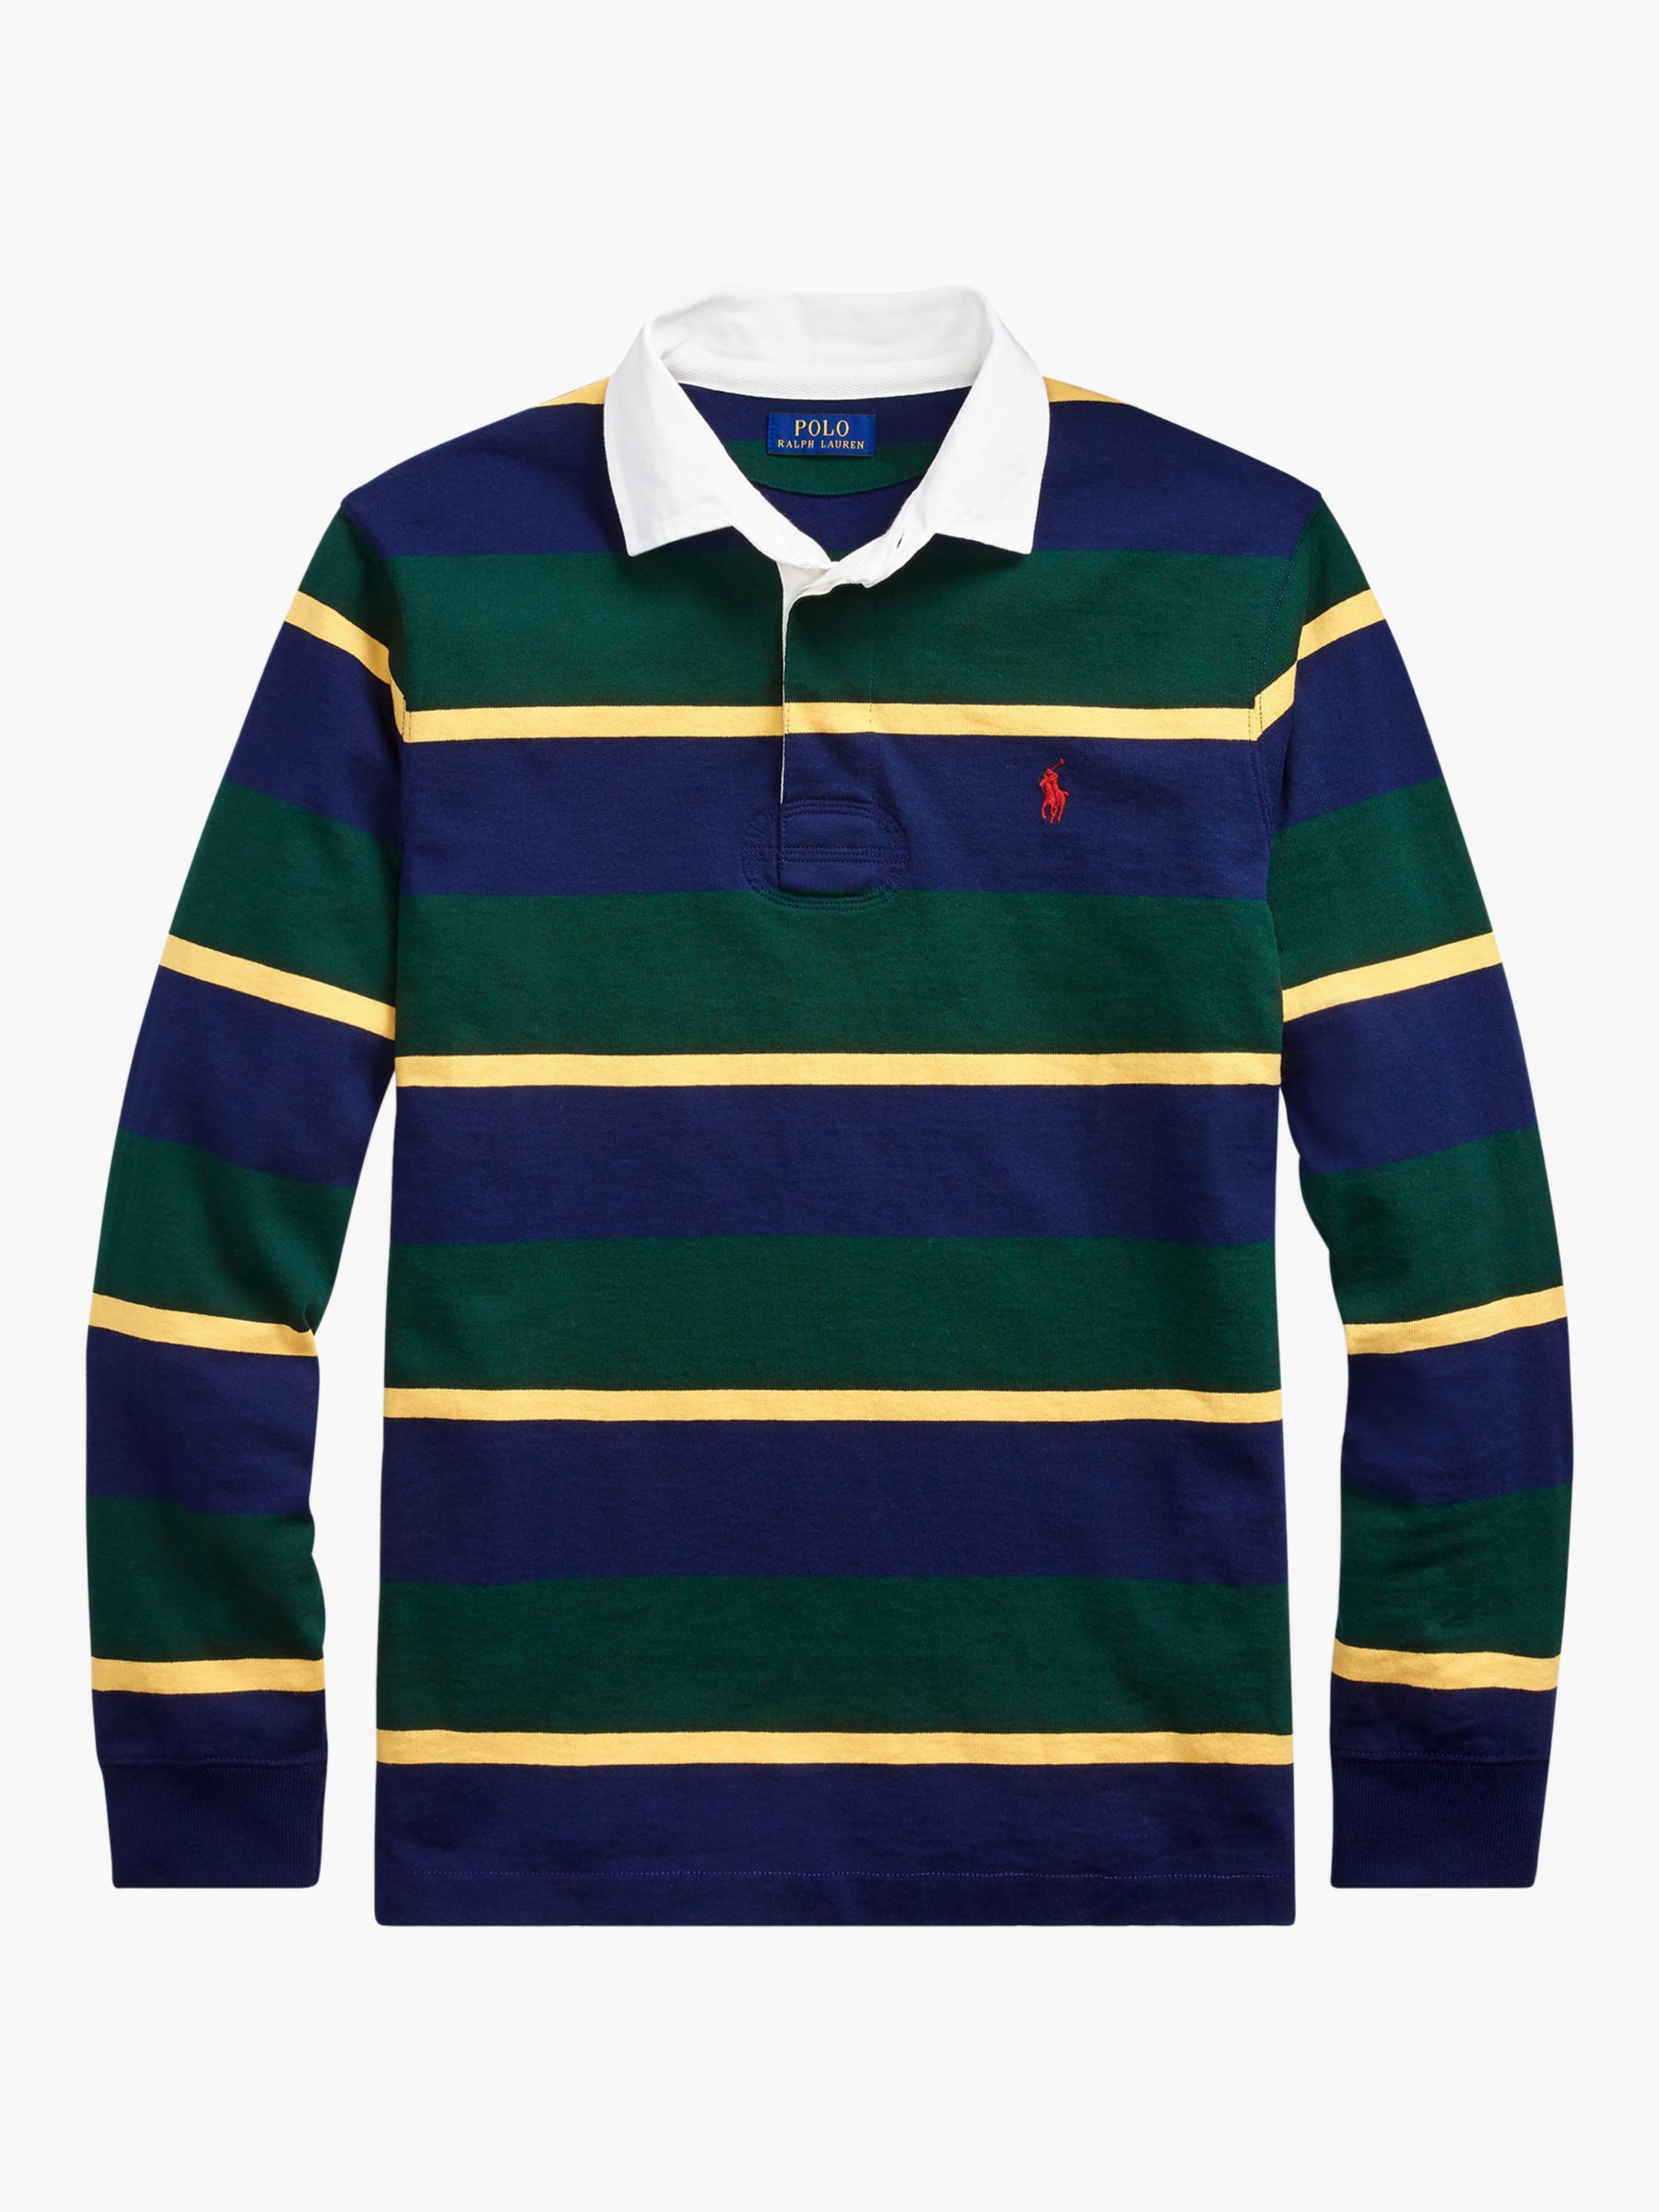 Polo Ralph Lauren Stripe Rugby Shirt 